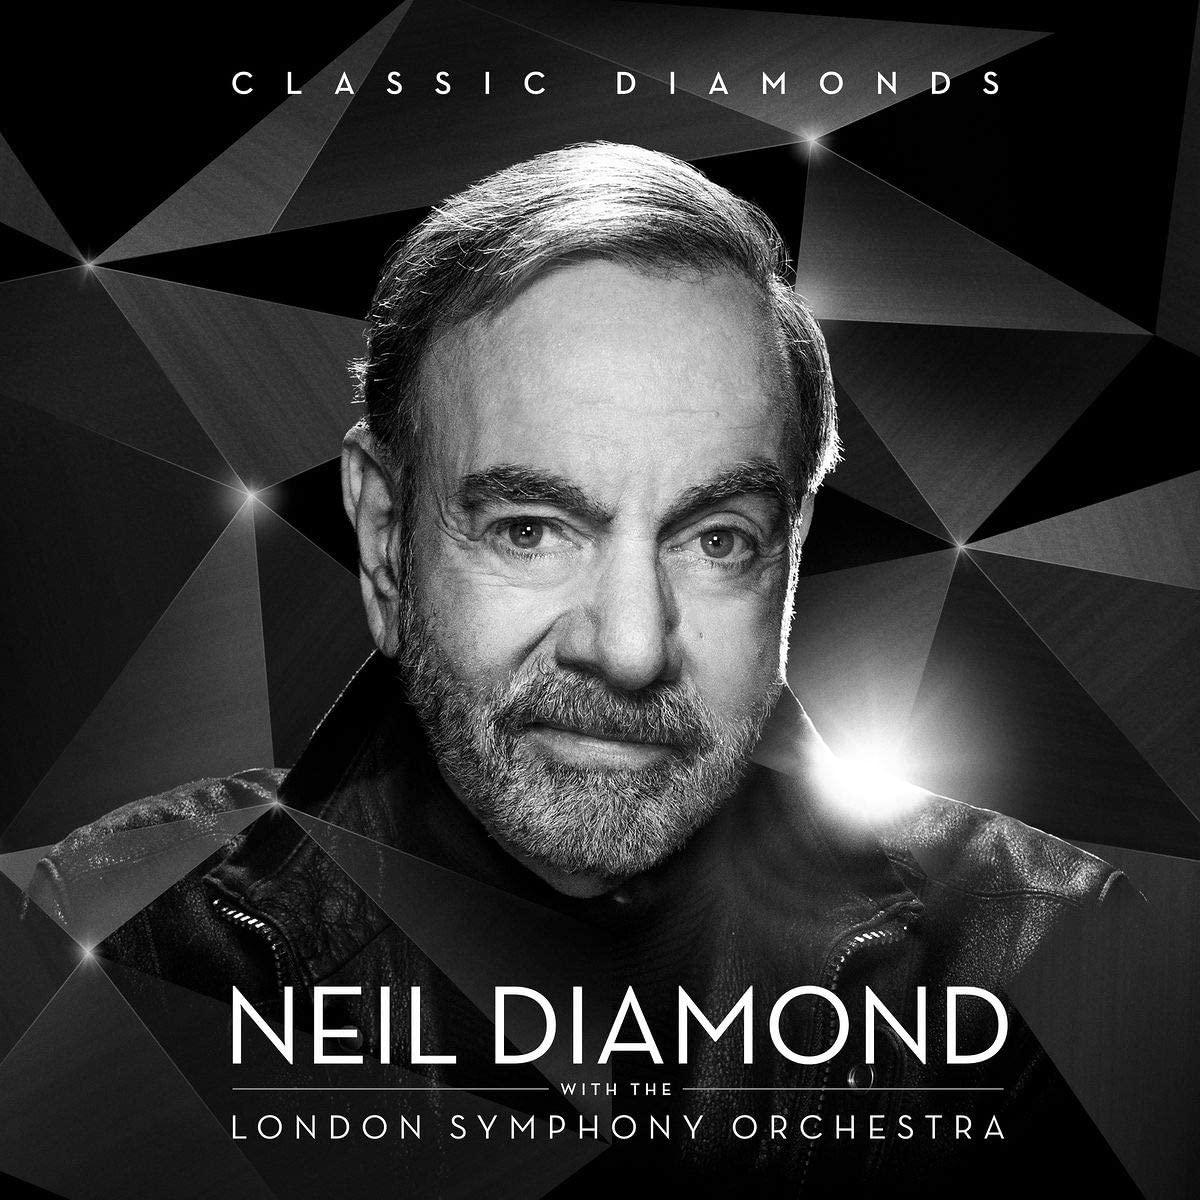 Neil Diamond With The London Symphony Orchestra -CCLASSIC DIAMONDS (2020) 2LP